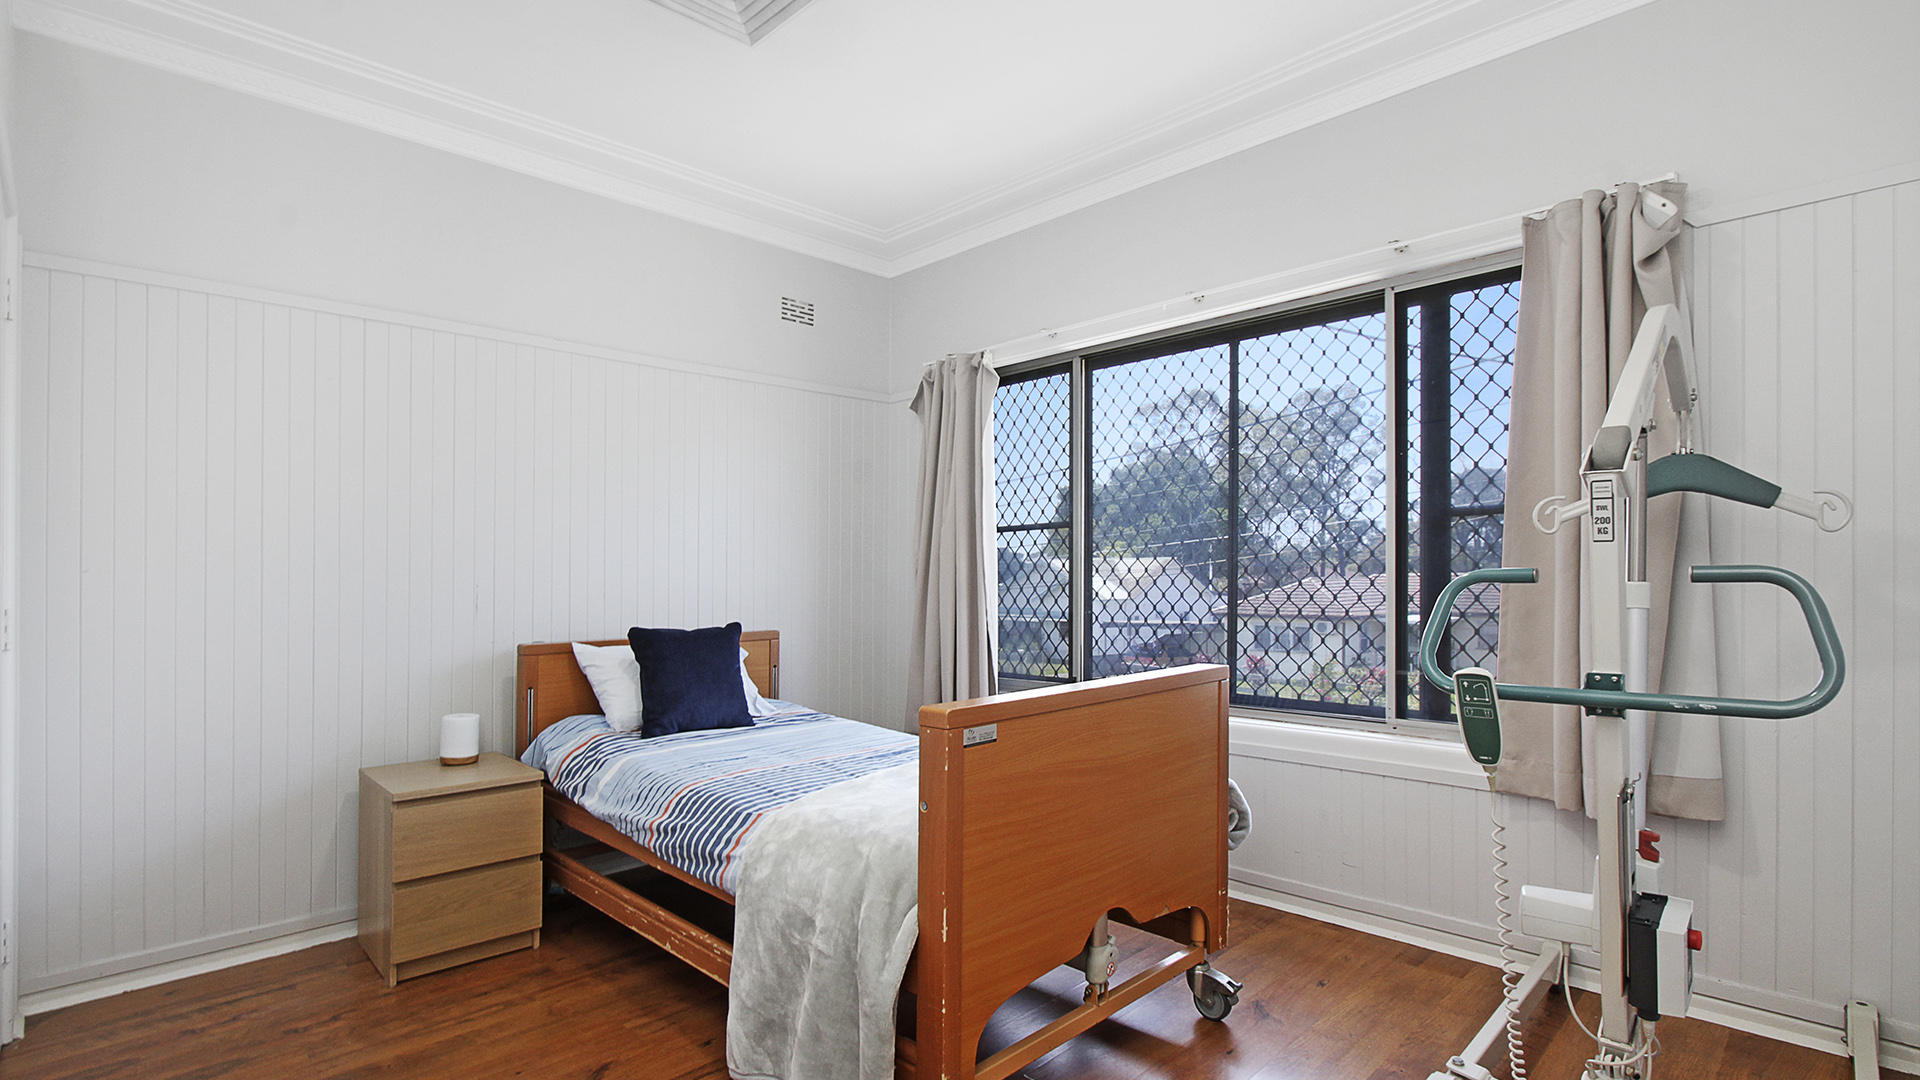 Cabramatta respite house image - bedroom